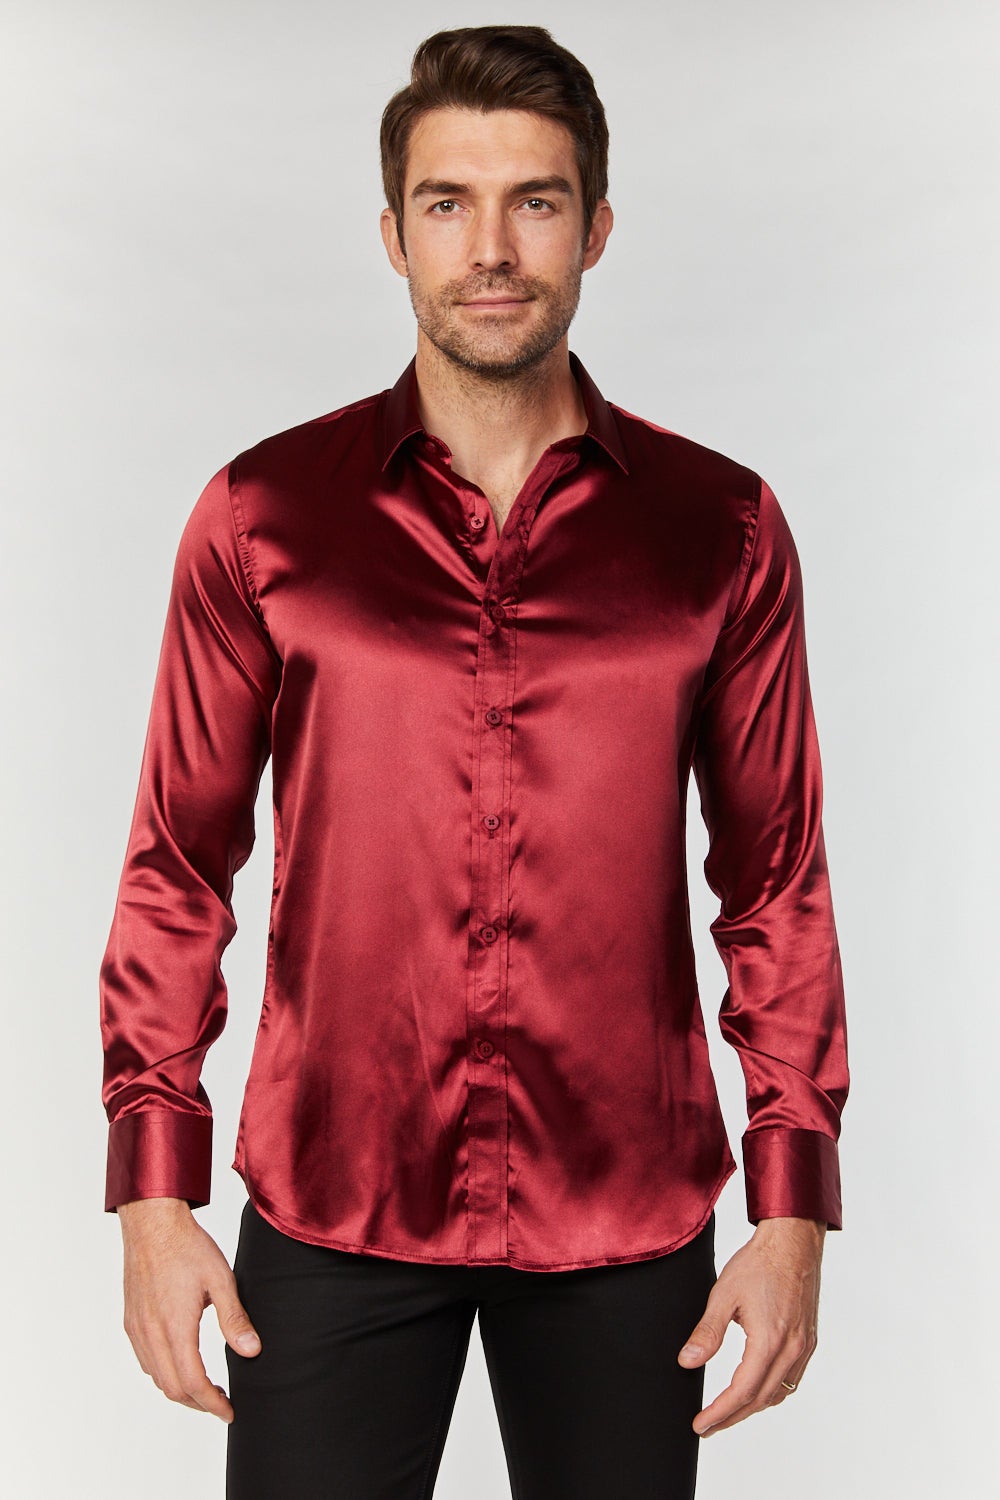 mens burgundy dress shirt